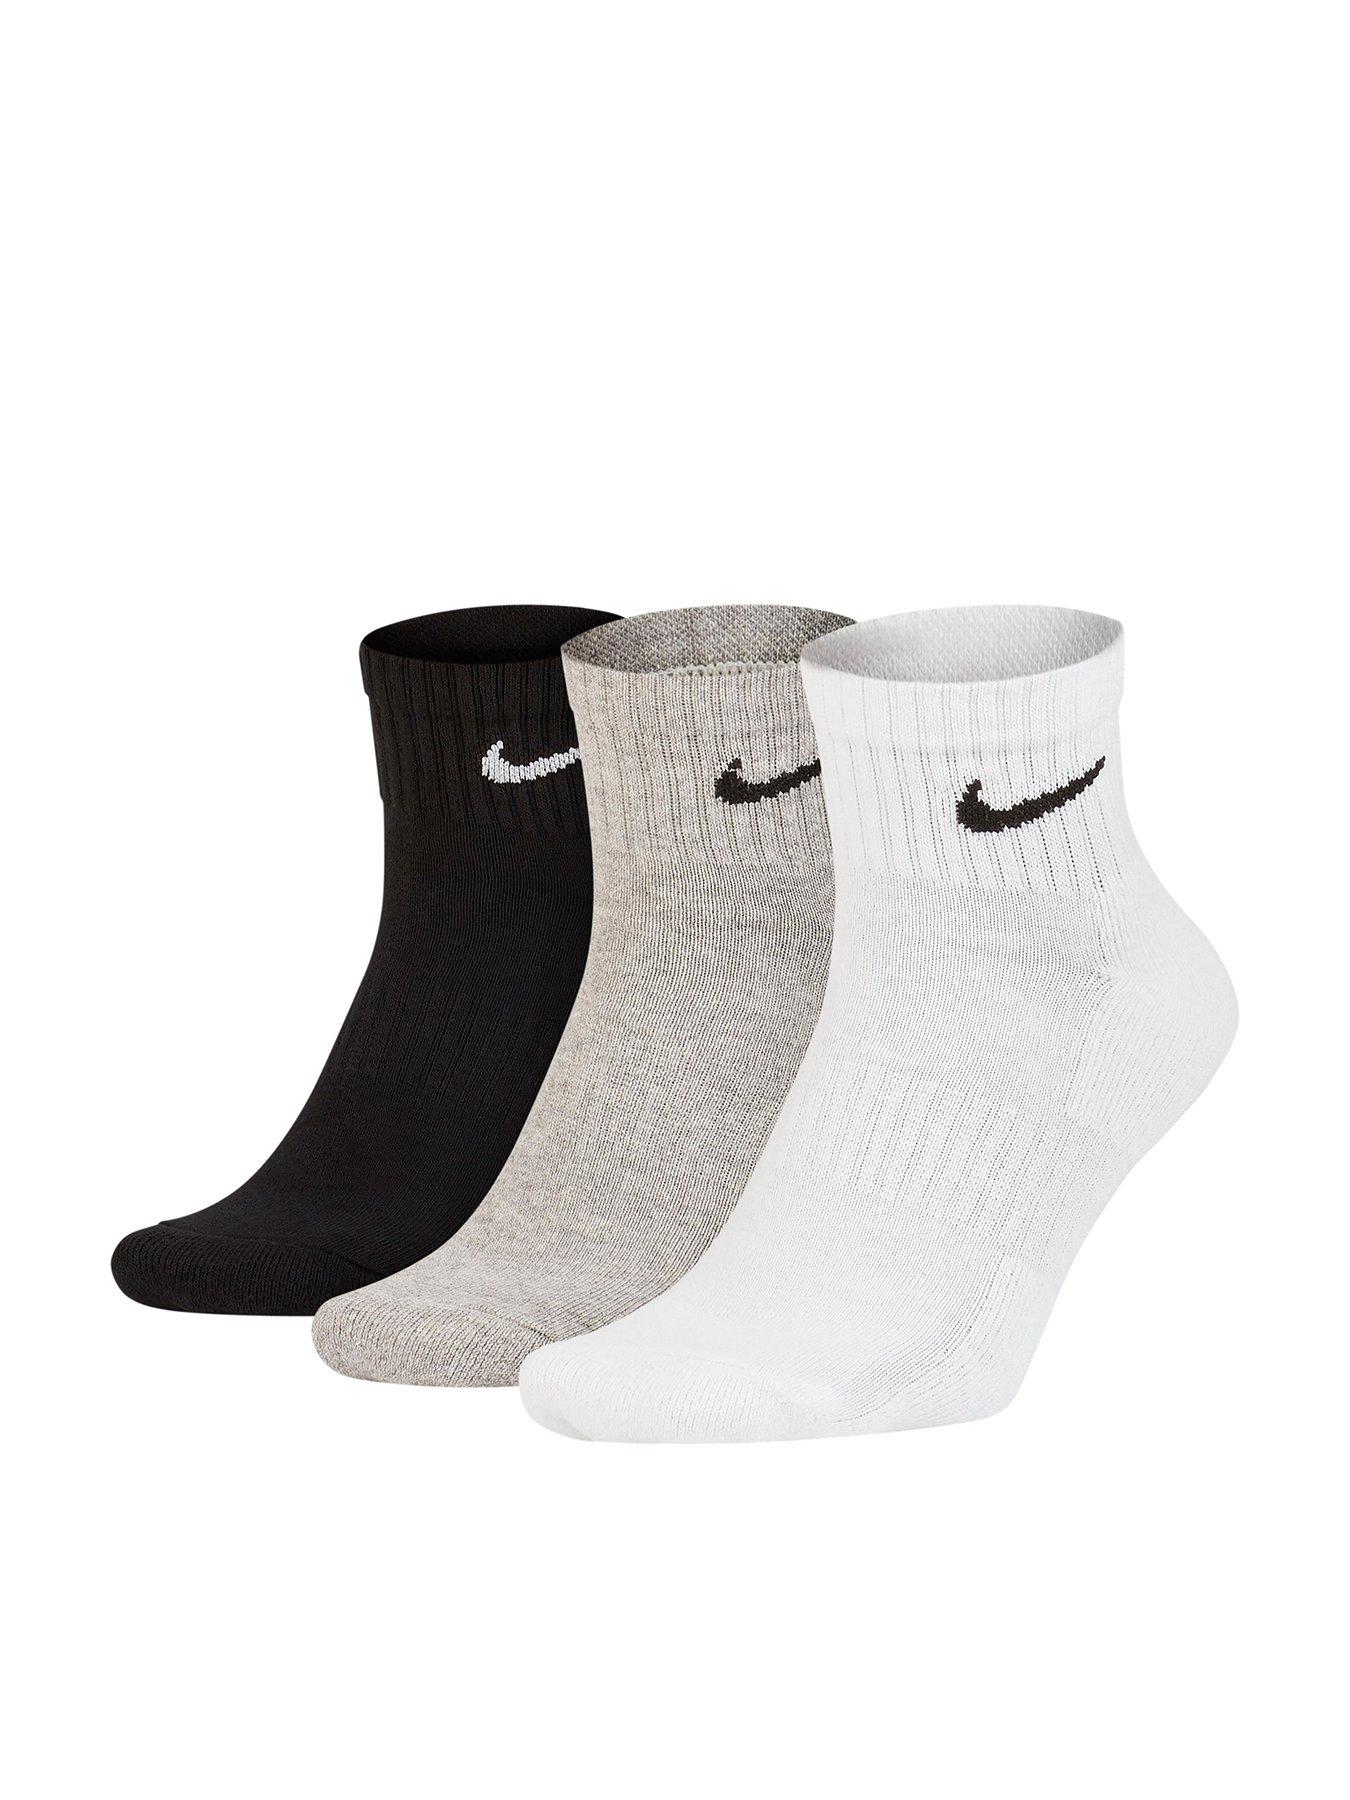 Nike Everyday Cushion Ankle Socks (3 Pack) - Multi | very.co.uk